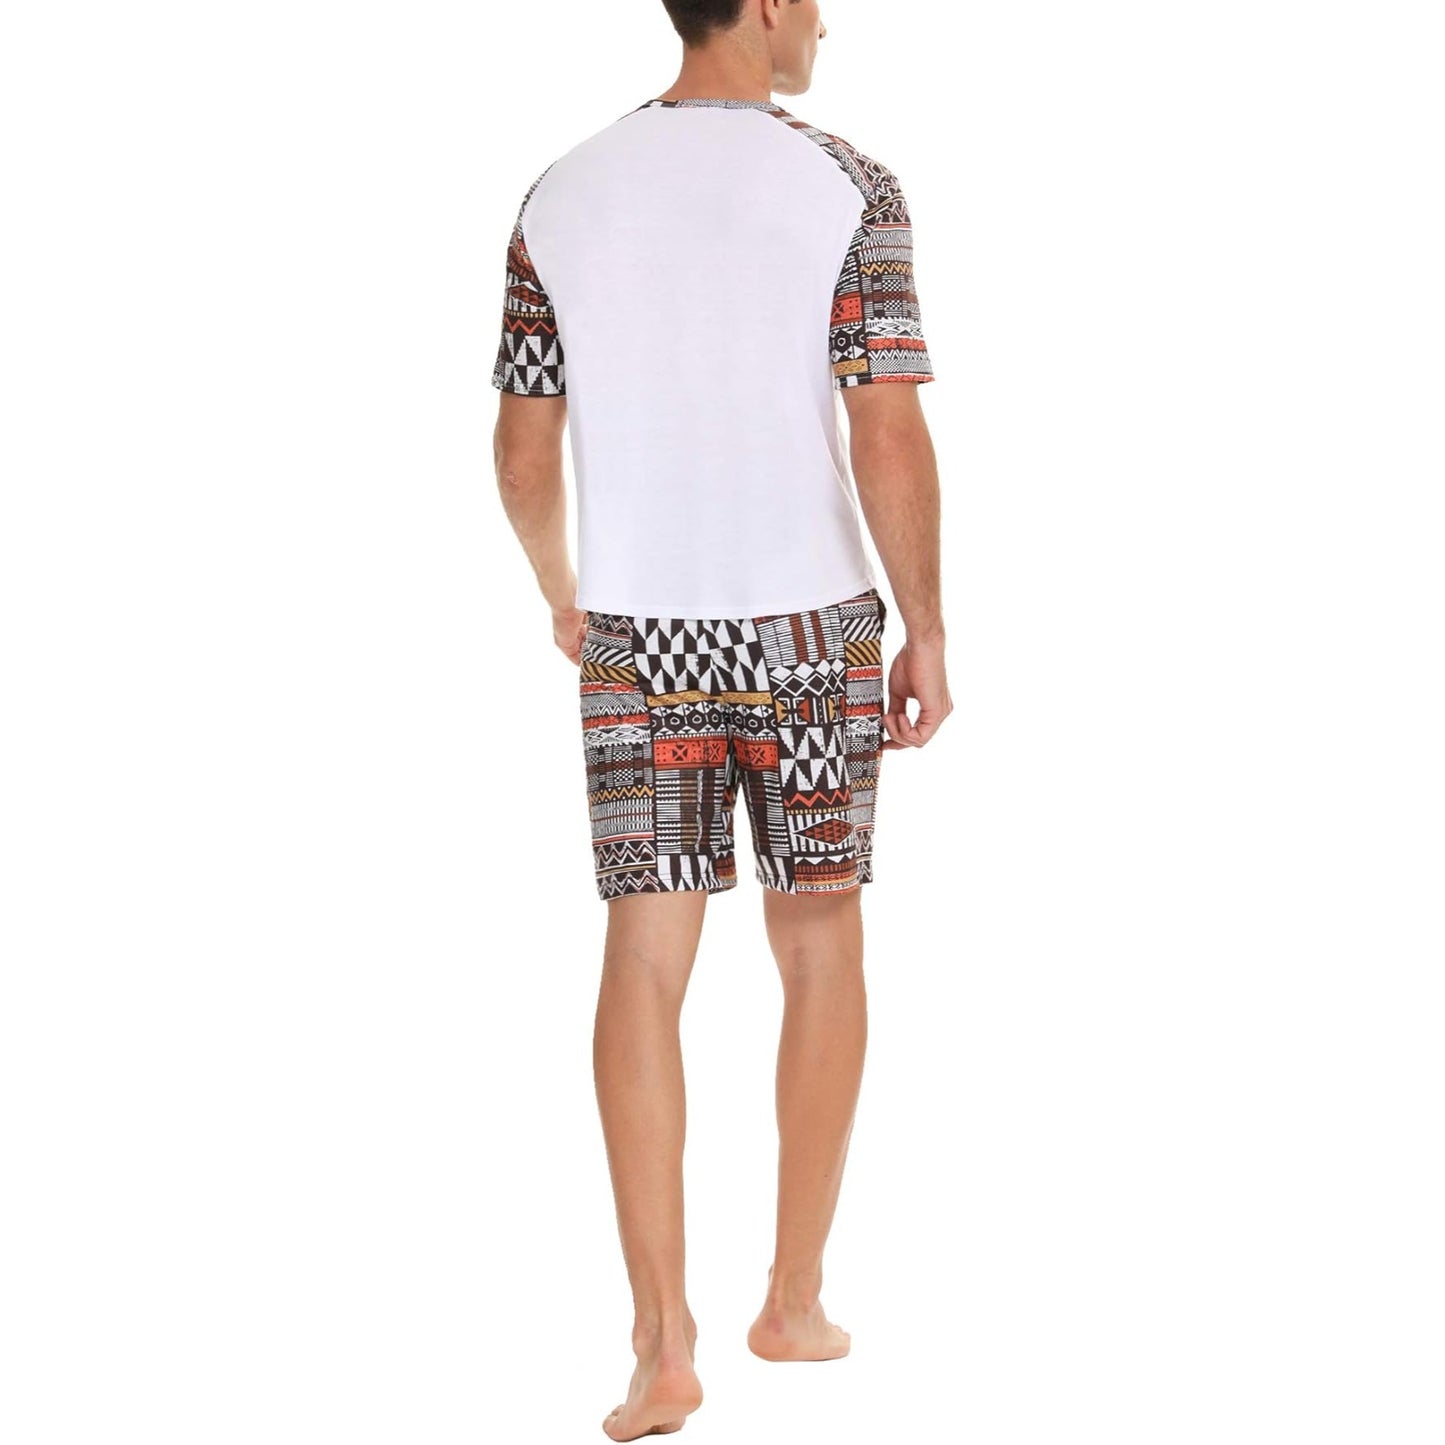 KINGBEEGA Men's Pajama Short Set - Size Medium Short Sleeve Cotton Pajama Shorts and Top